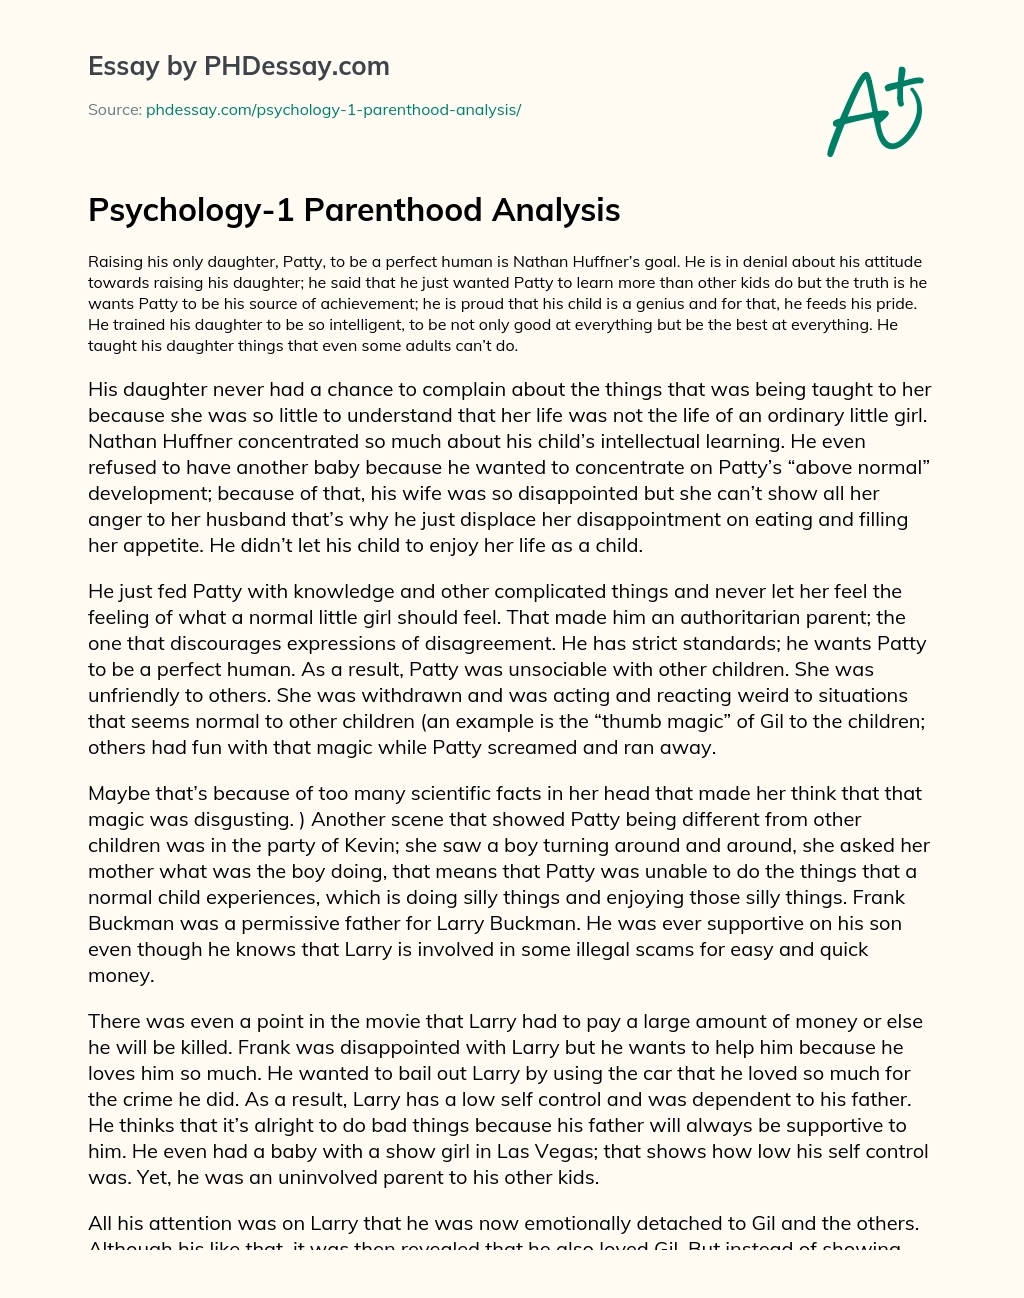 Psychology-1 Parenthood Analysis essay